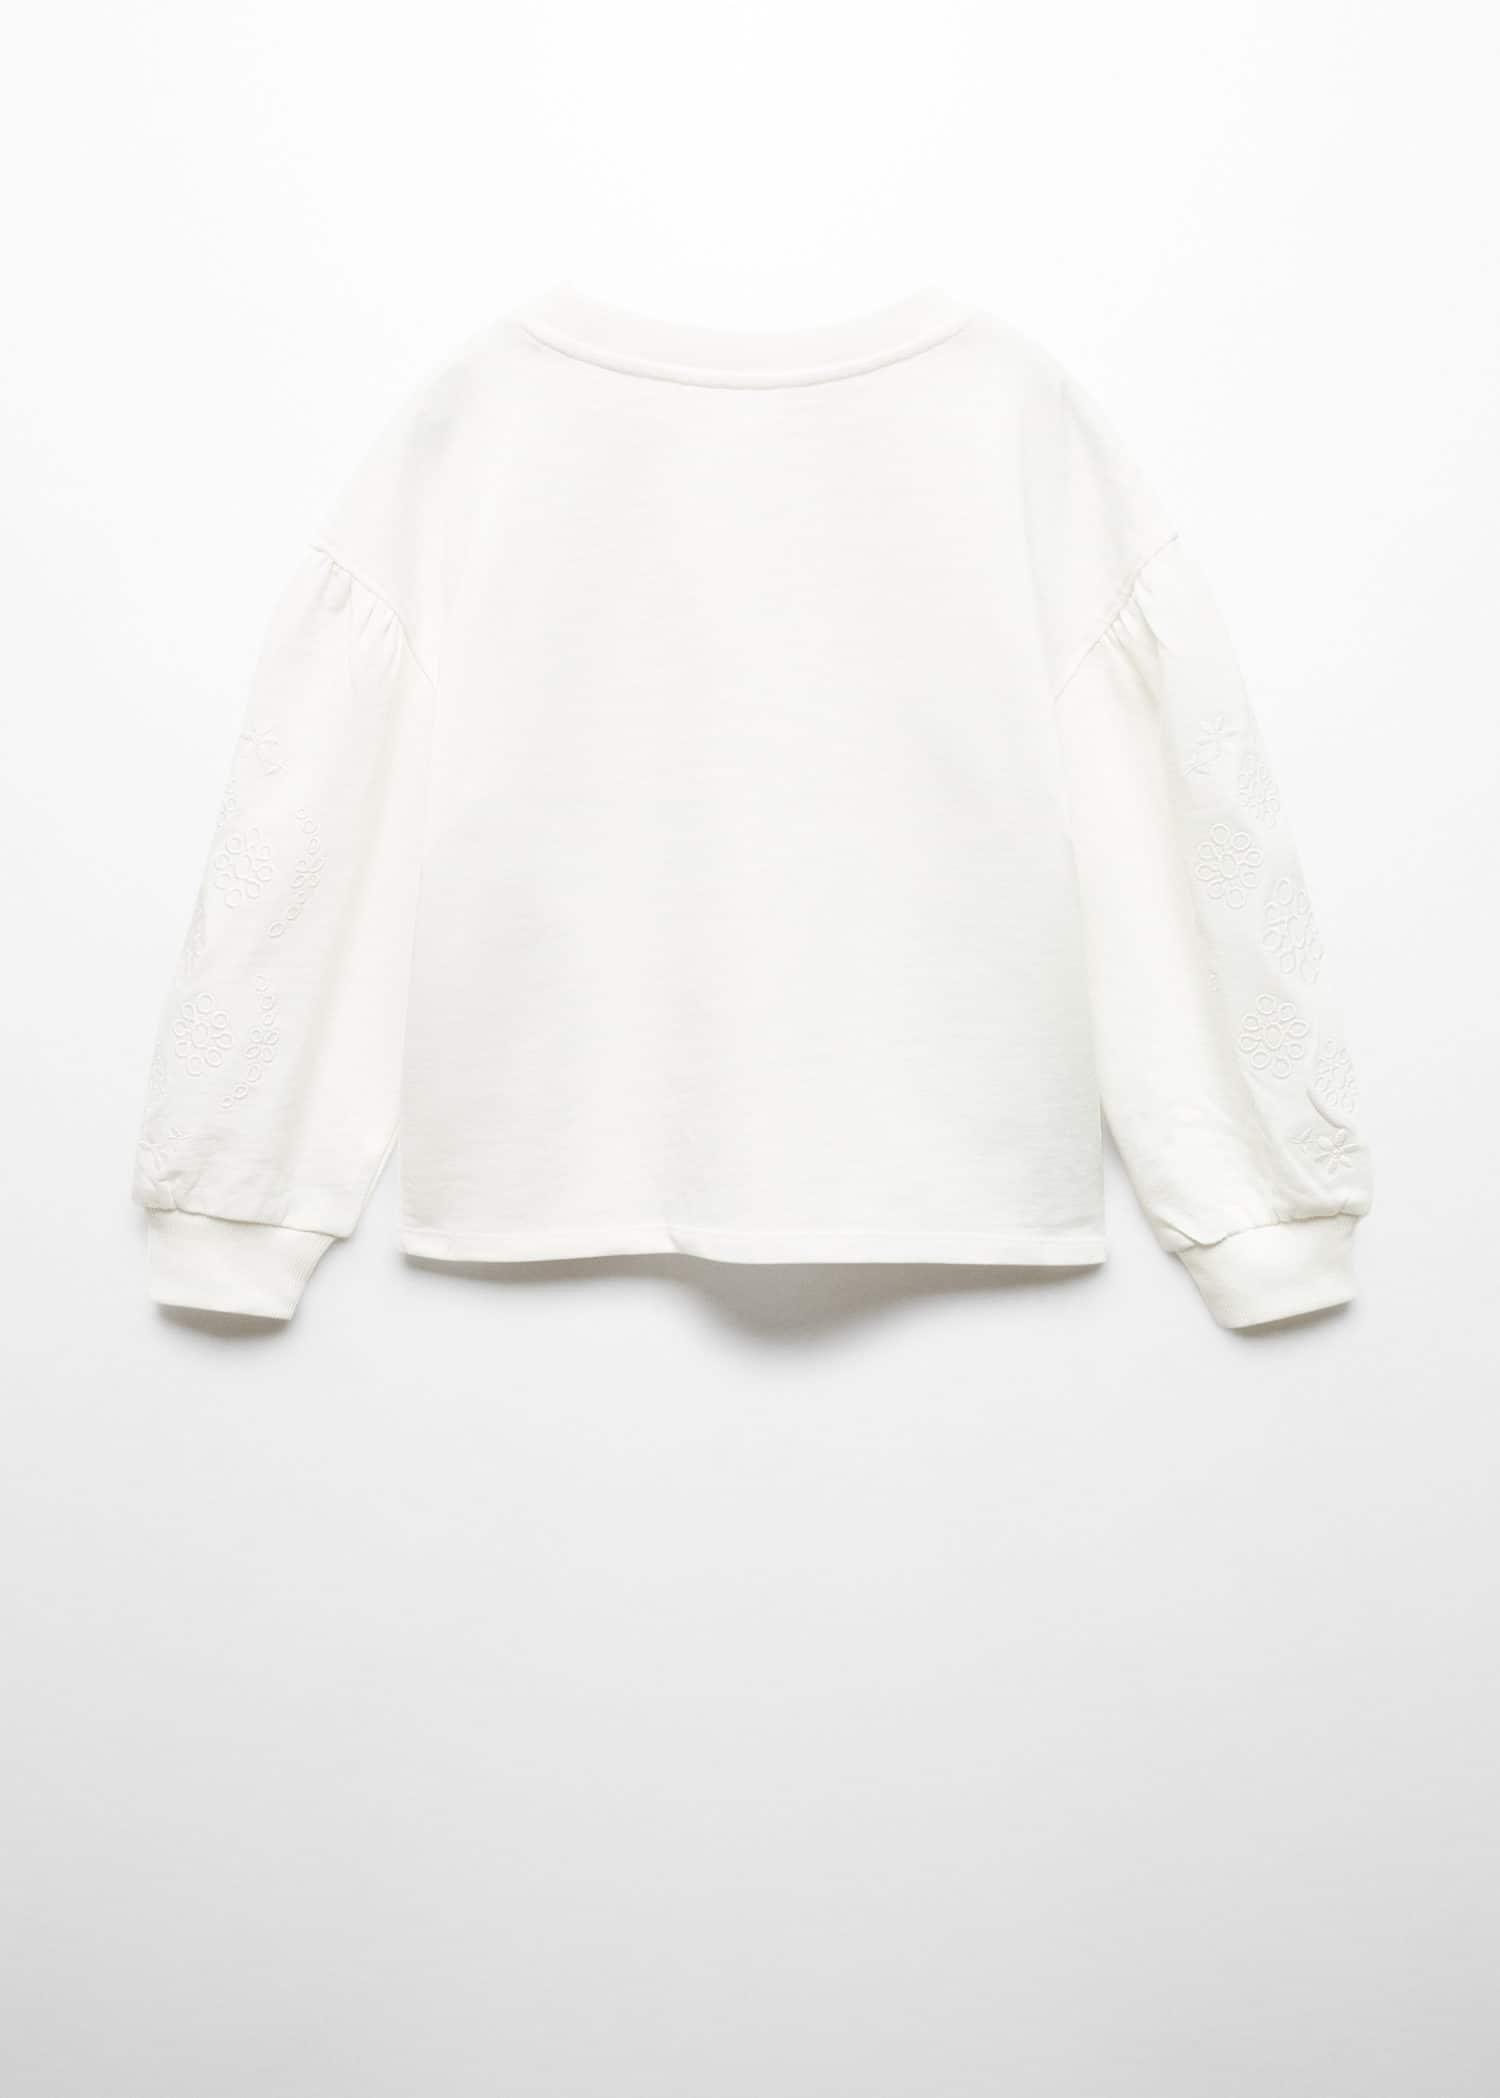 Mango - White Embroidered Sleeve Sweatshirt, Kids Girls